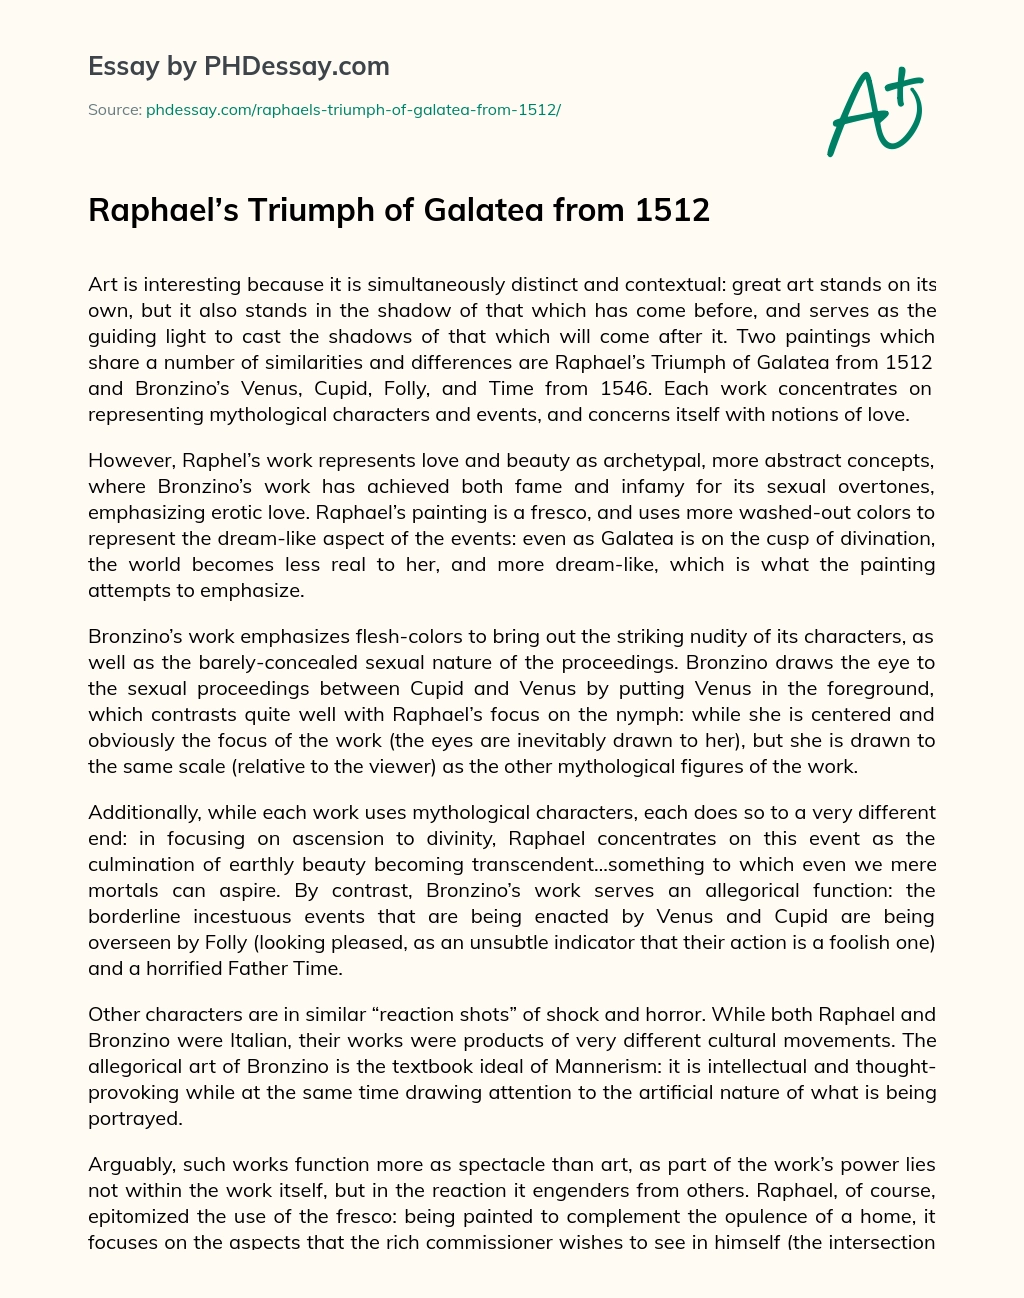 Raphael’s Triumph of Galatea from 1512 essay